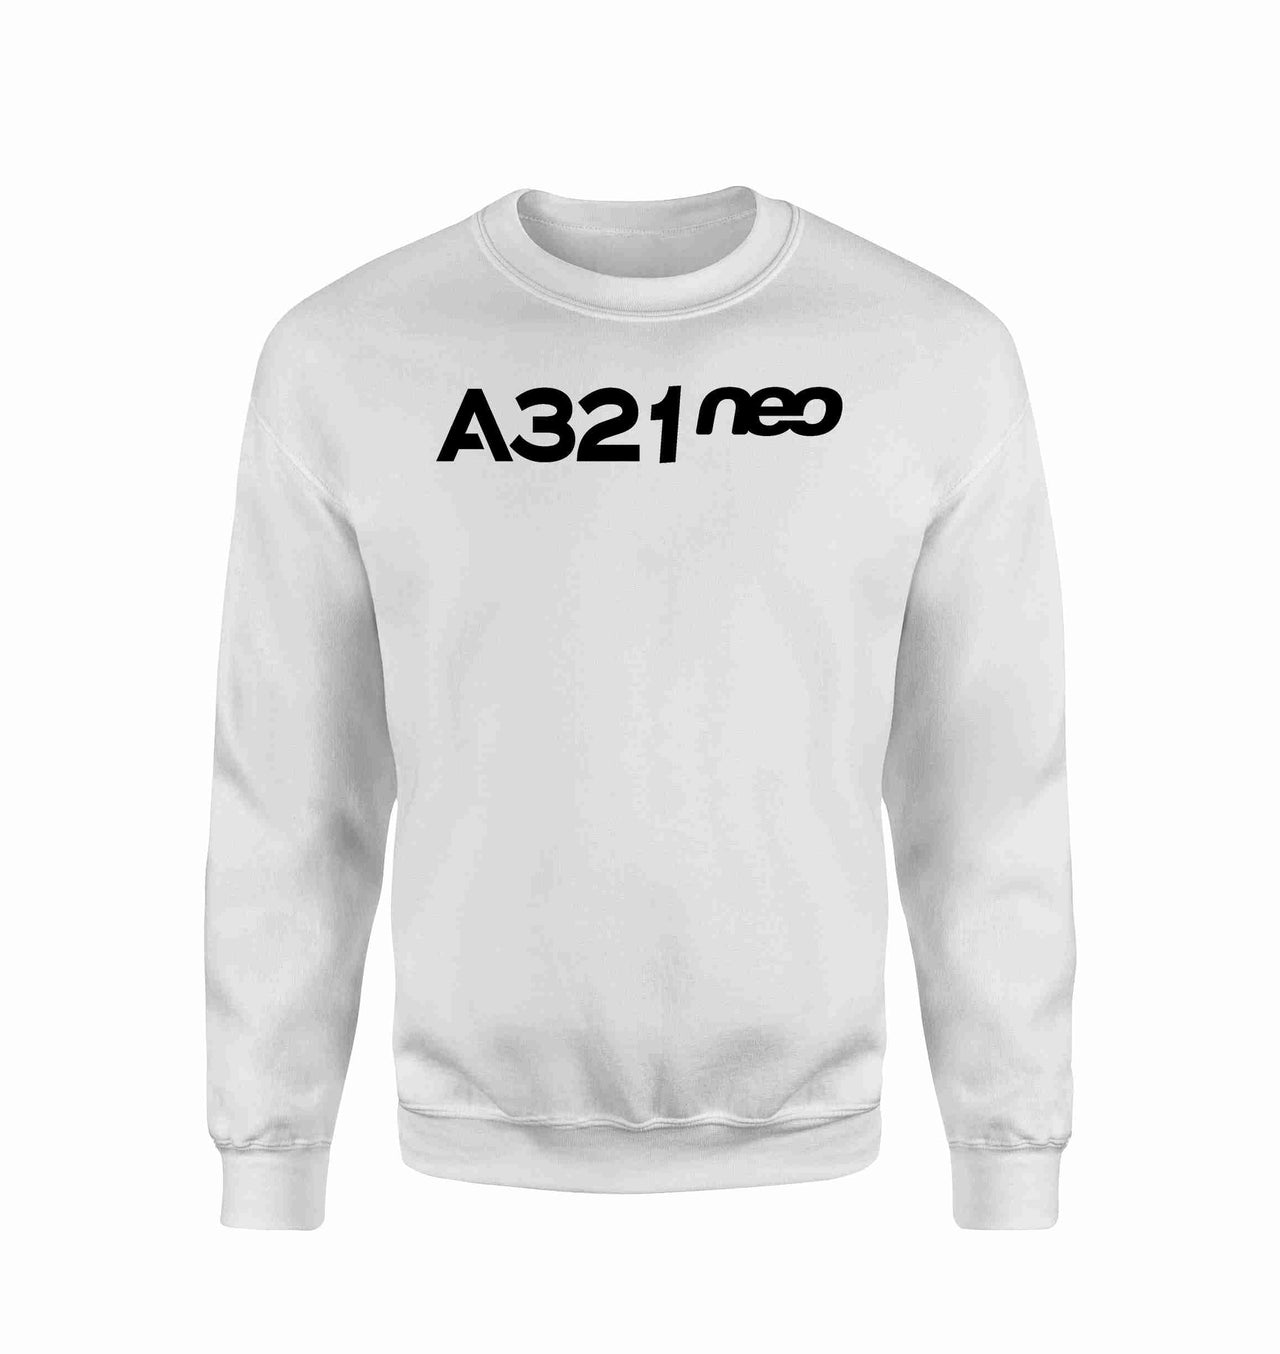 A321neo & Text Designed Sweatshirts